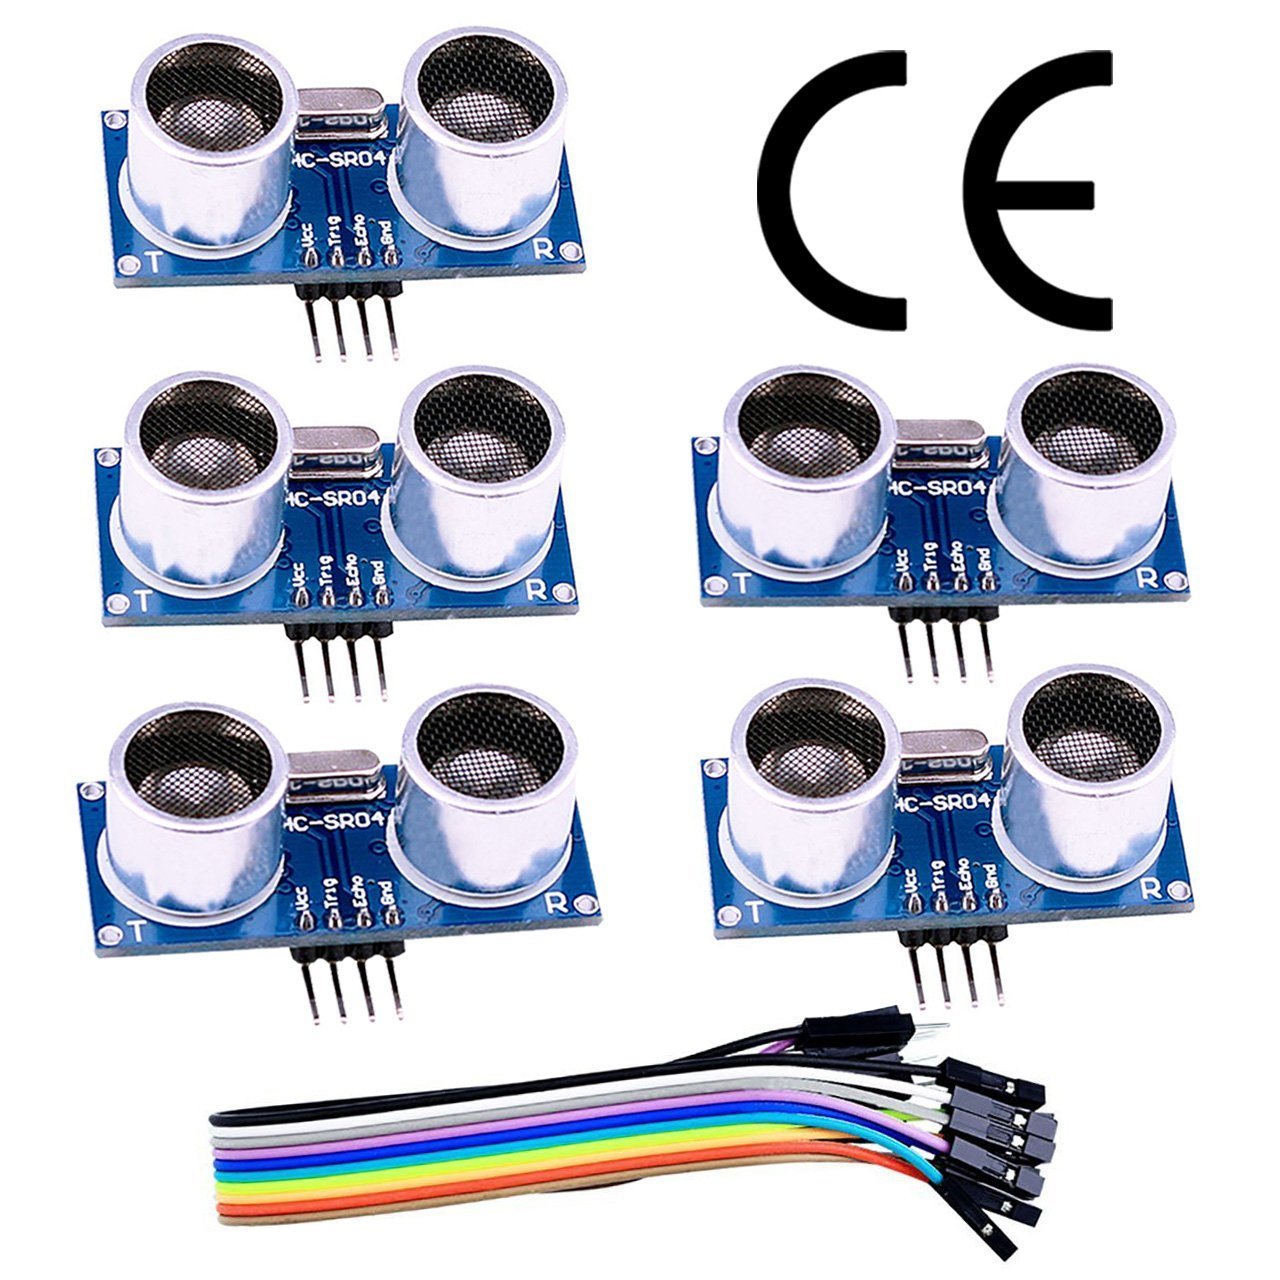 HC-SR04 Ultrasonic Sensor Distance Module (5pcs) for Arduino UNO MEGA2560 Nano Robot XBee ZigBee by ElecRight